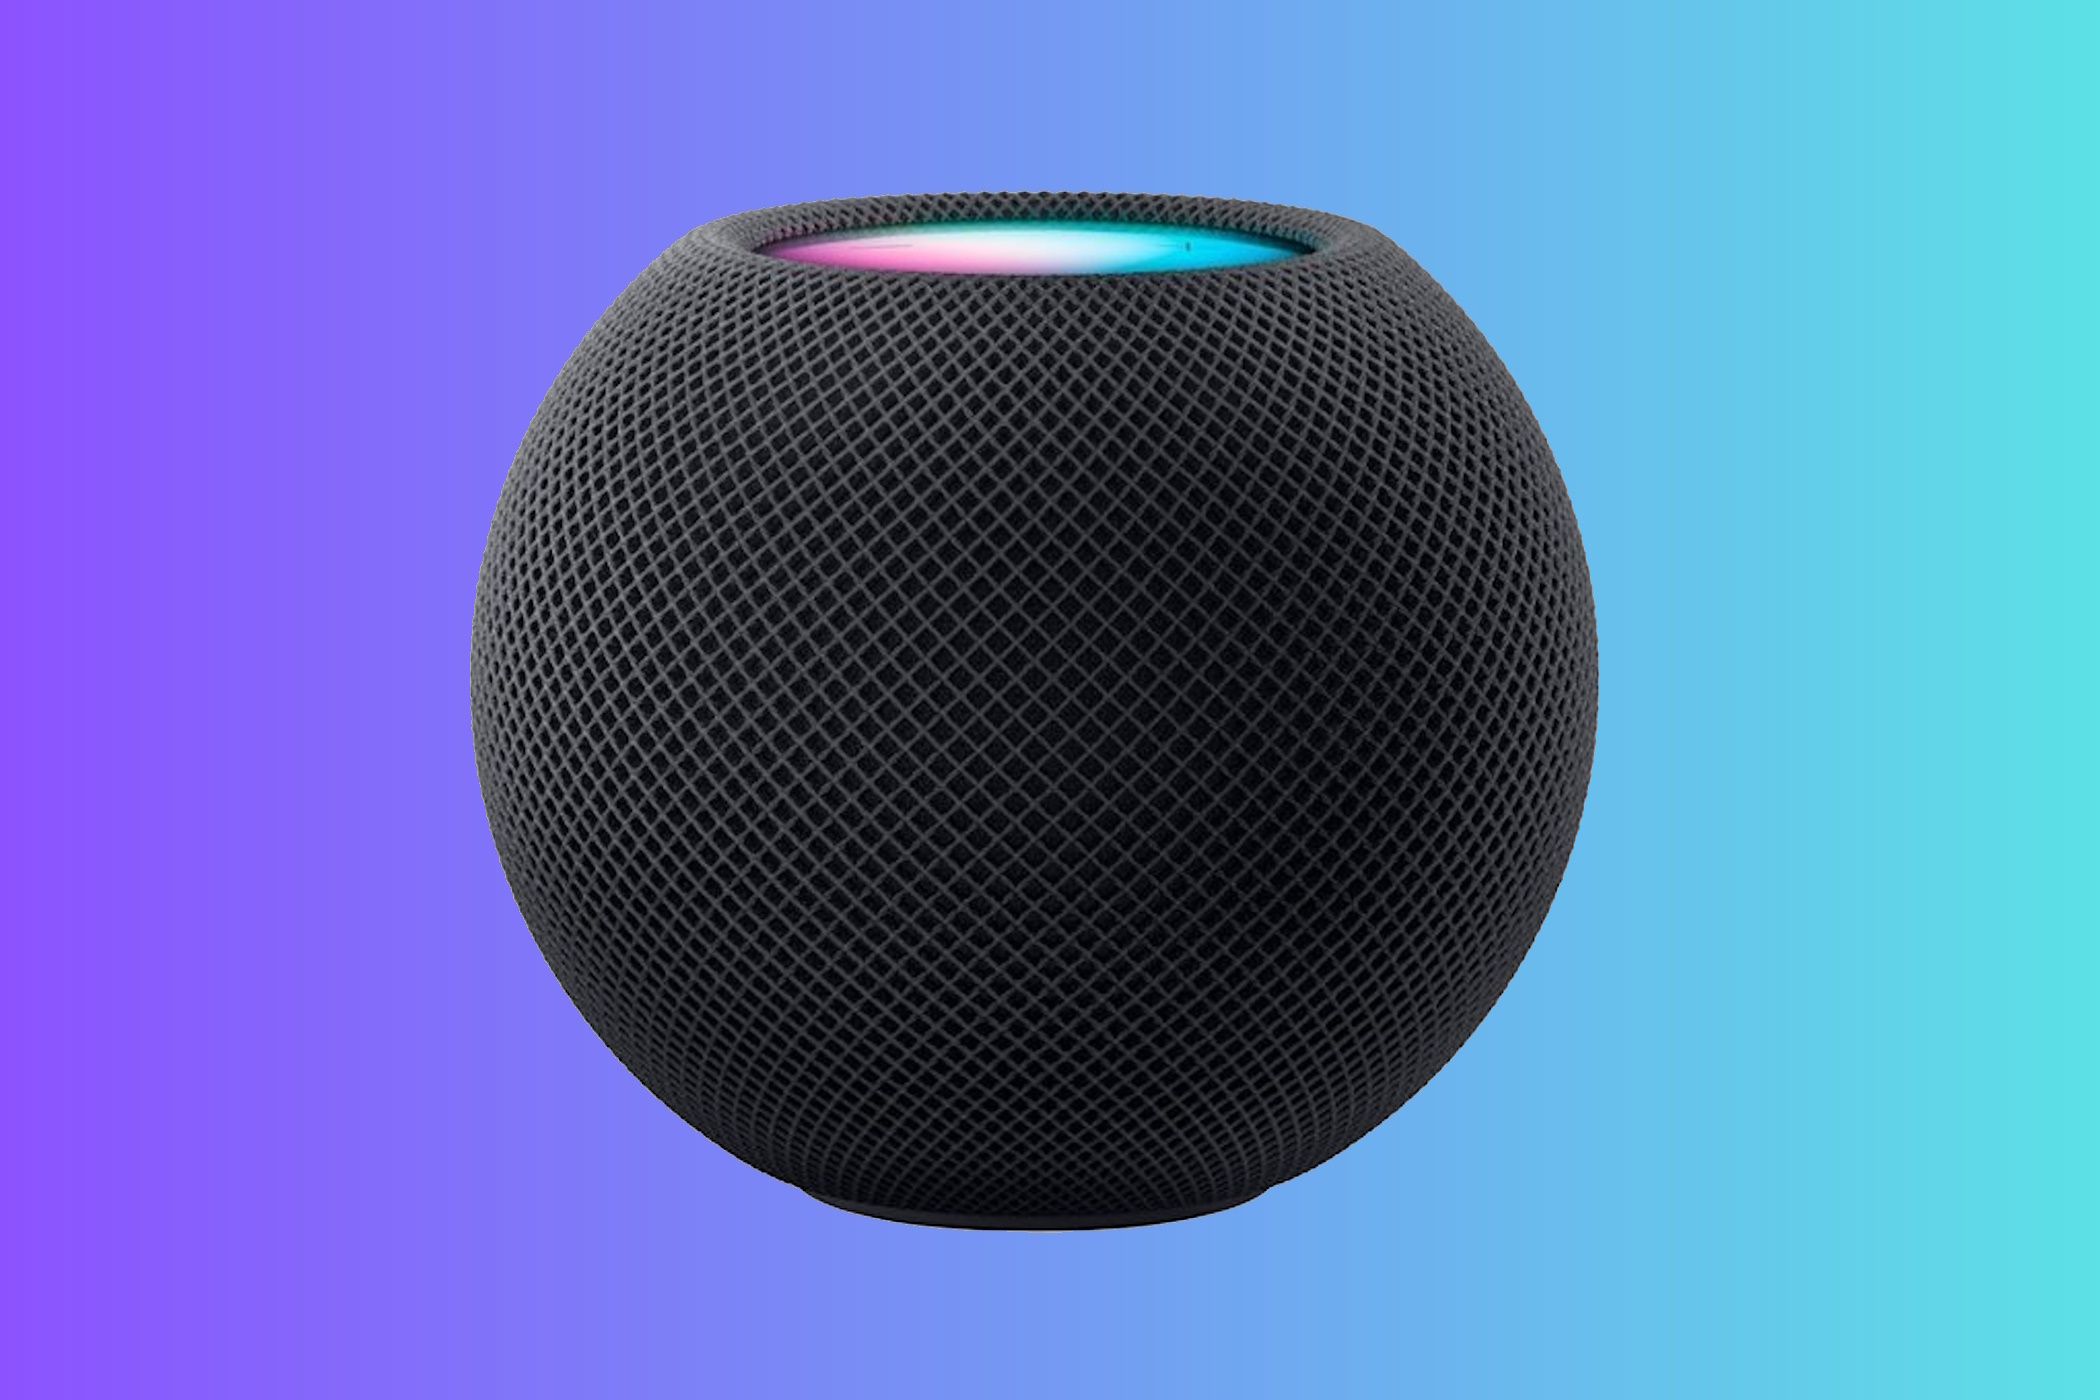 Apple's HomePod mini speaker set against a colorful gradient background